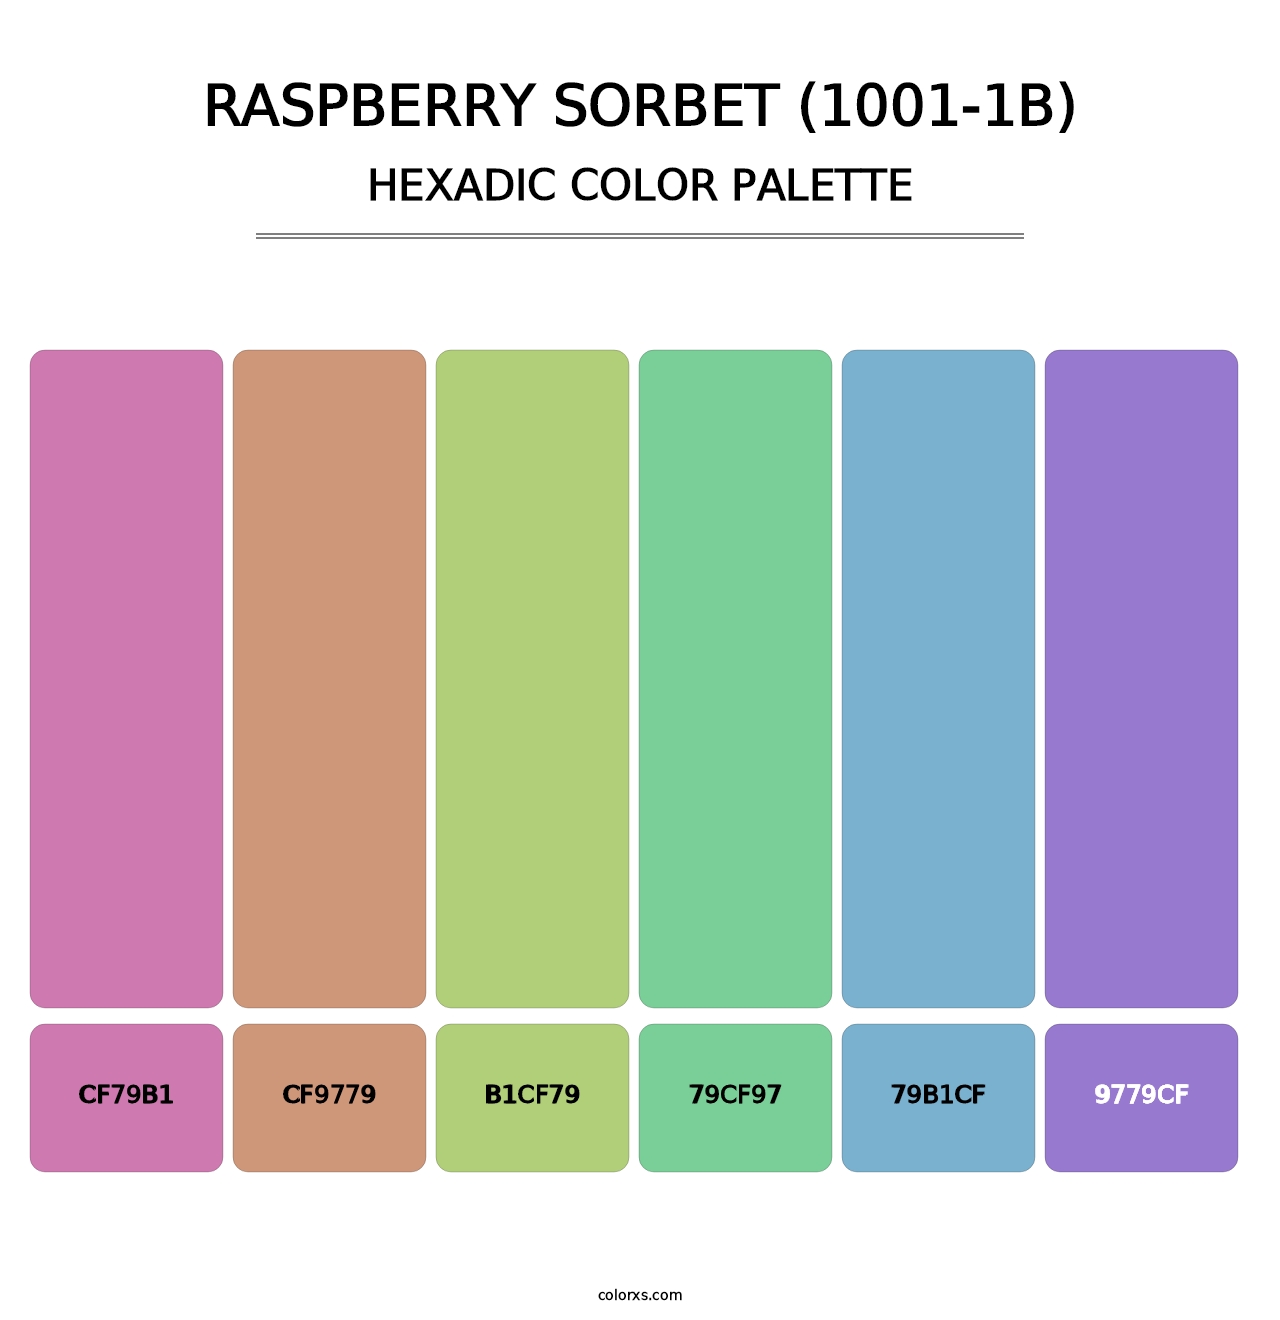 Raspberry Sorbet (1001-1B) - Hexadic Color Palette